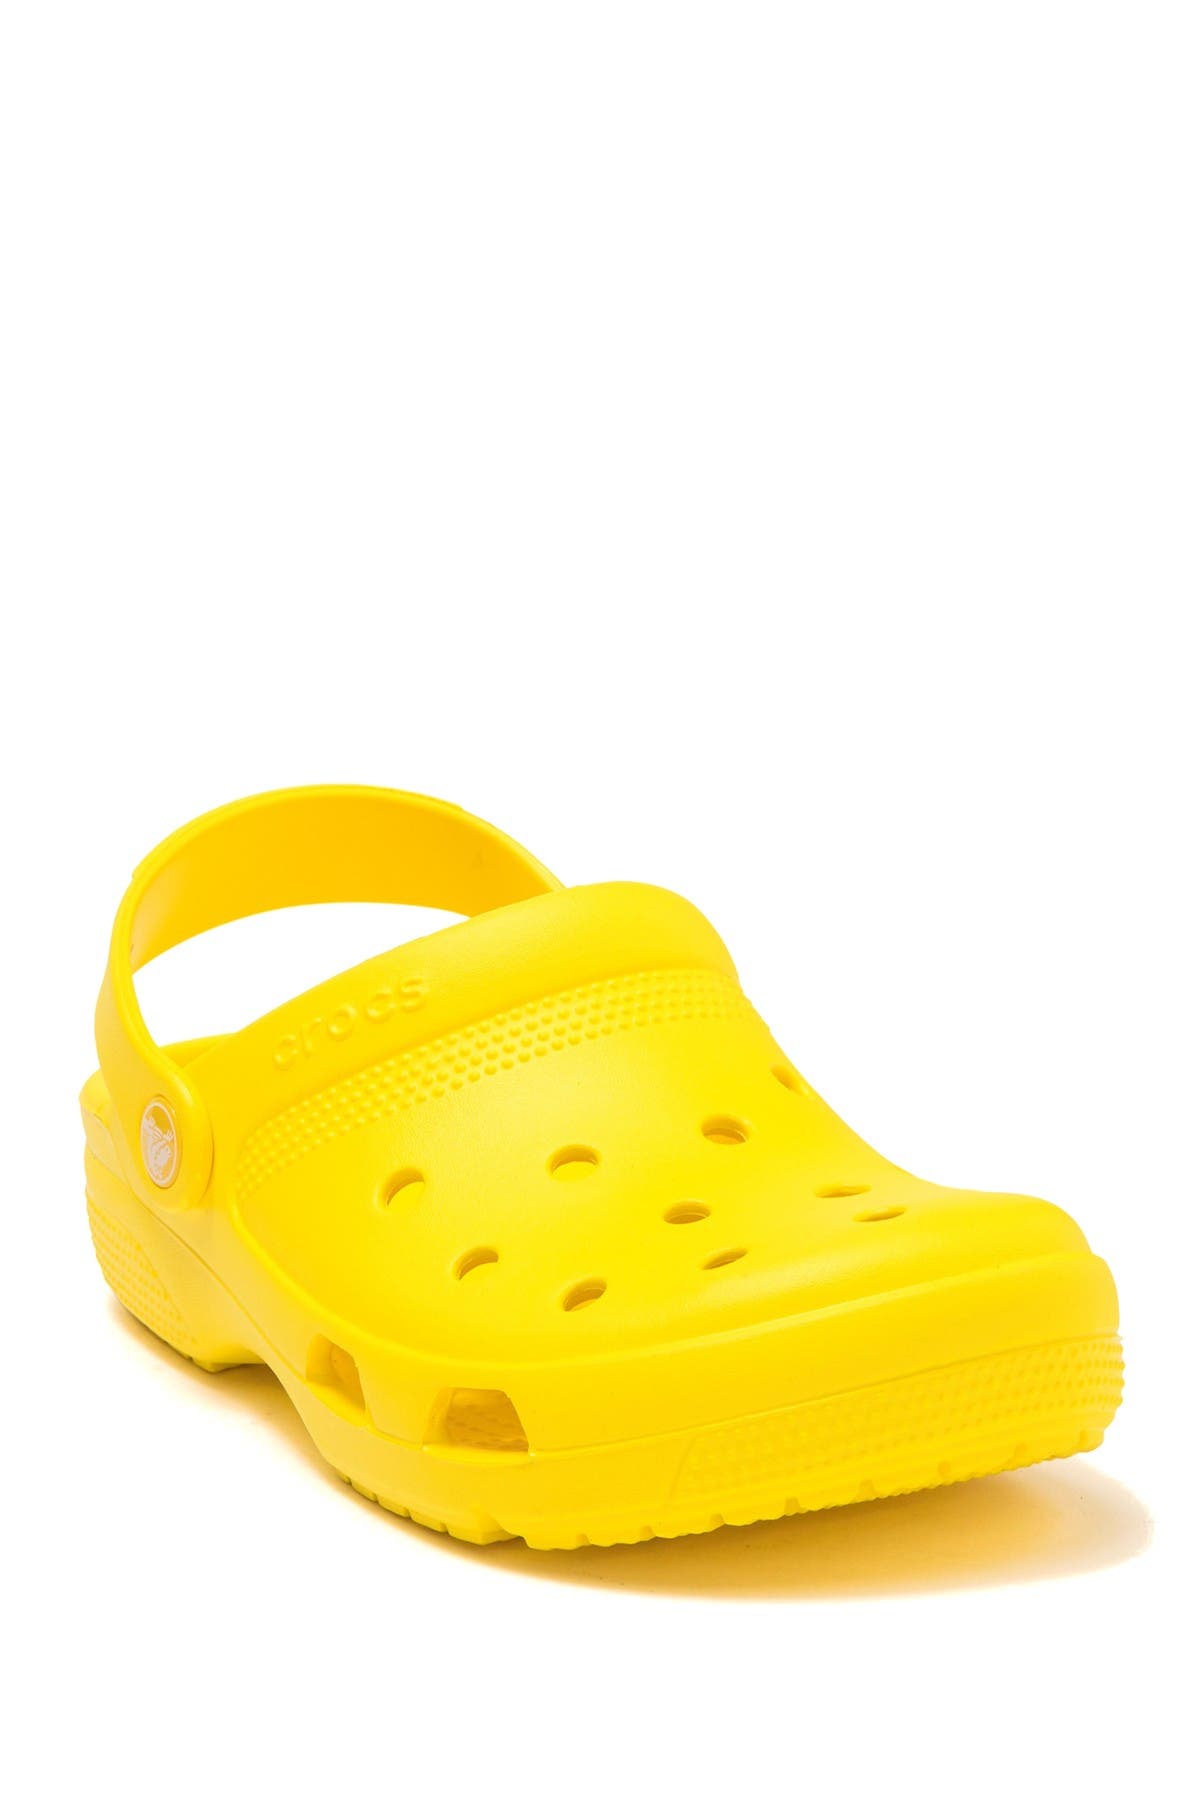 crocs yellow slides